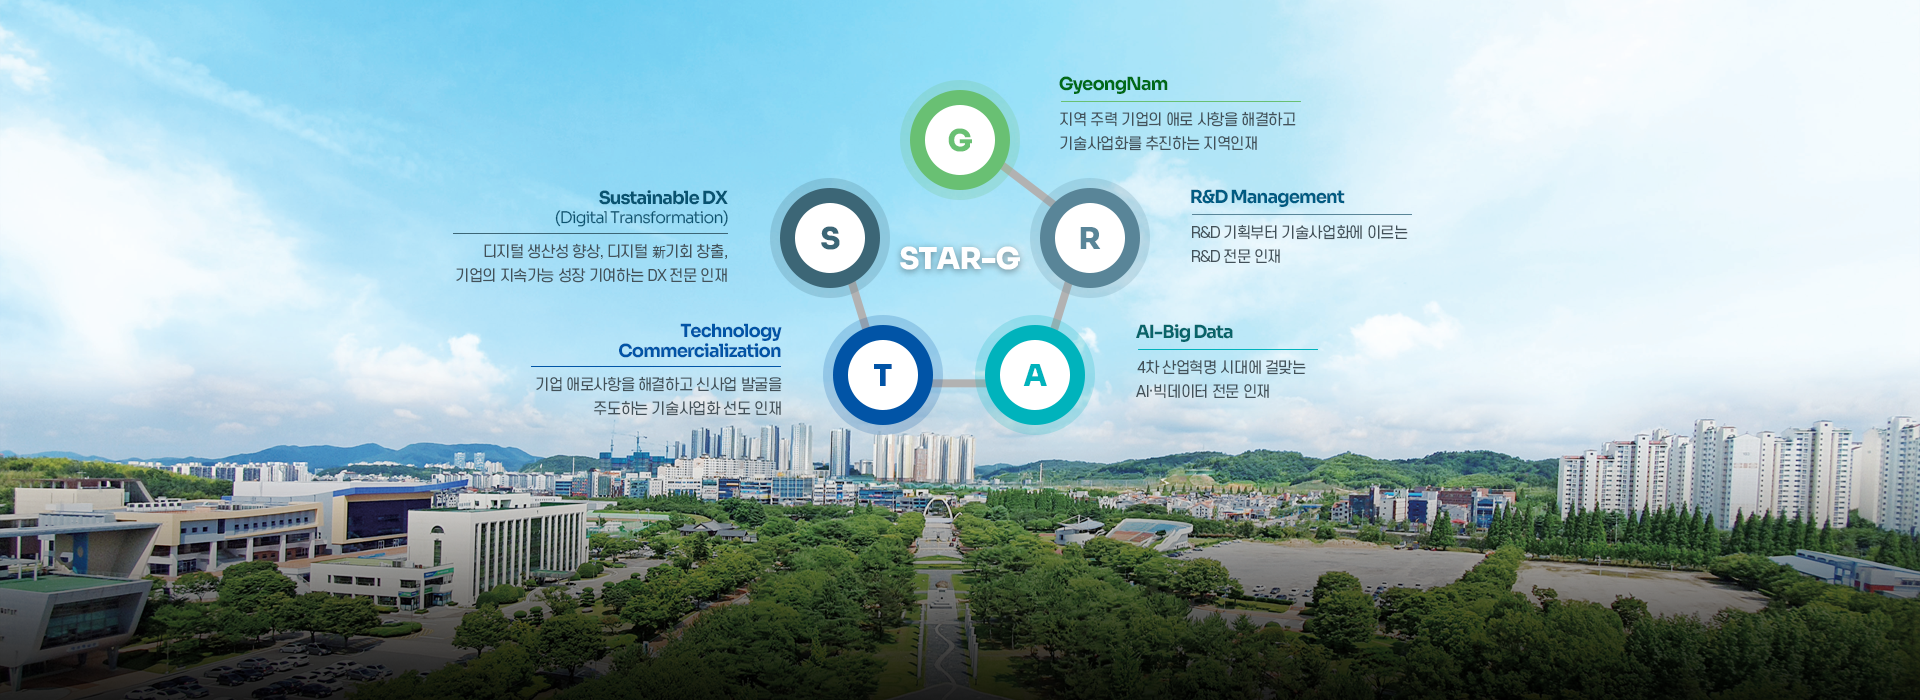 STAR-G GyeongNam | R&D Management | AI-Big Data | Technology Commercialization | Sustainable DX